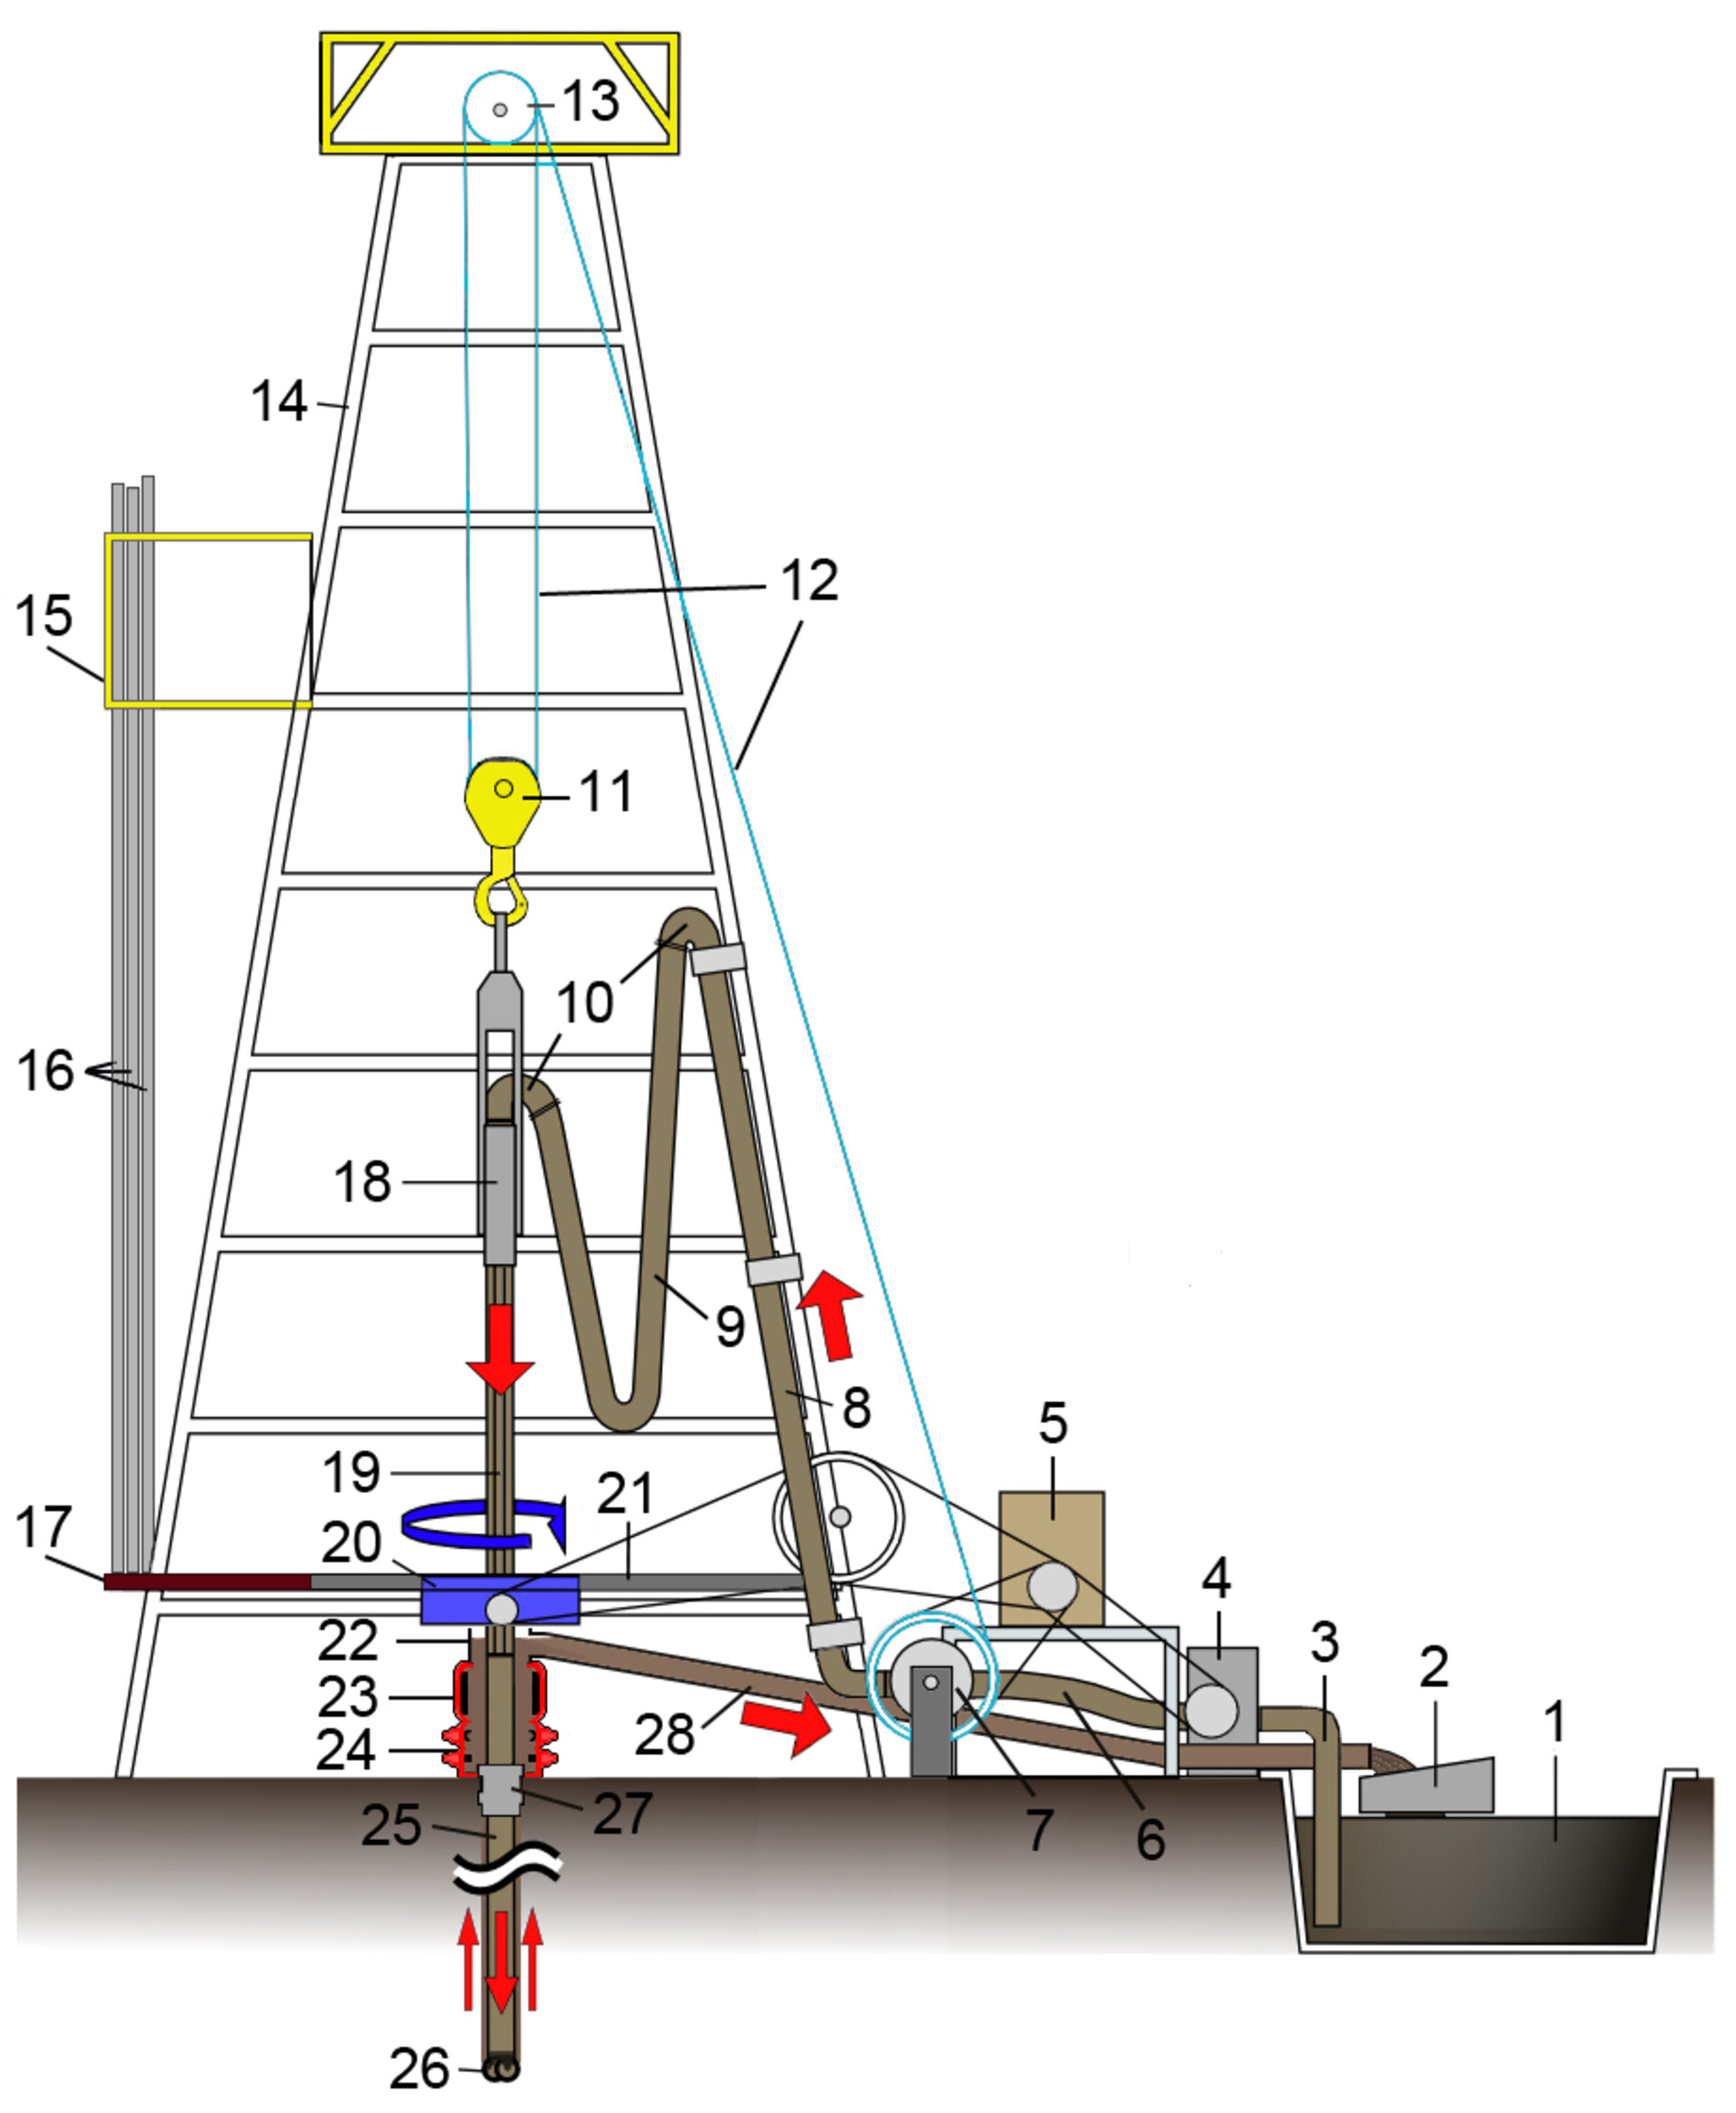 Diagram of a drilling rig